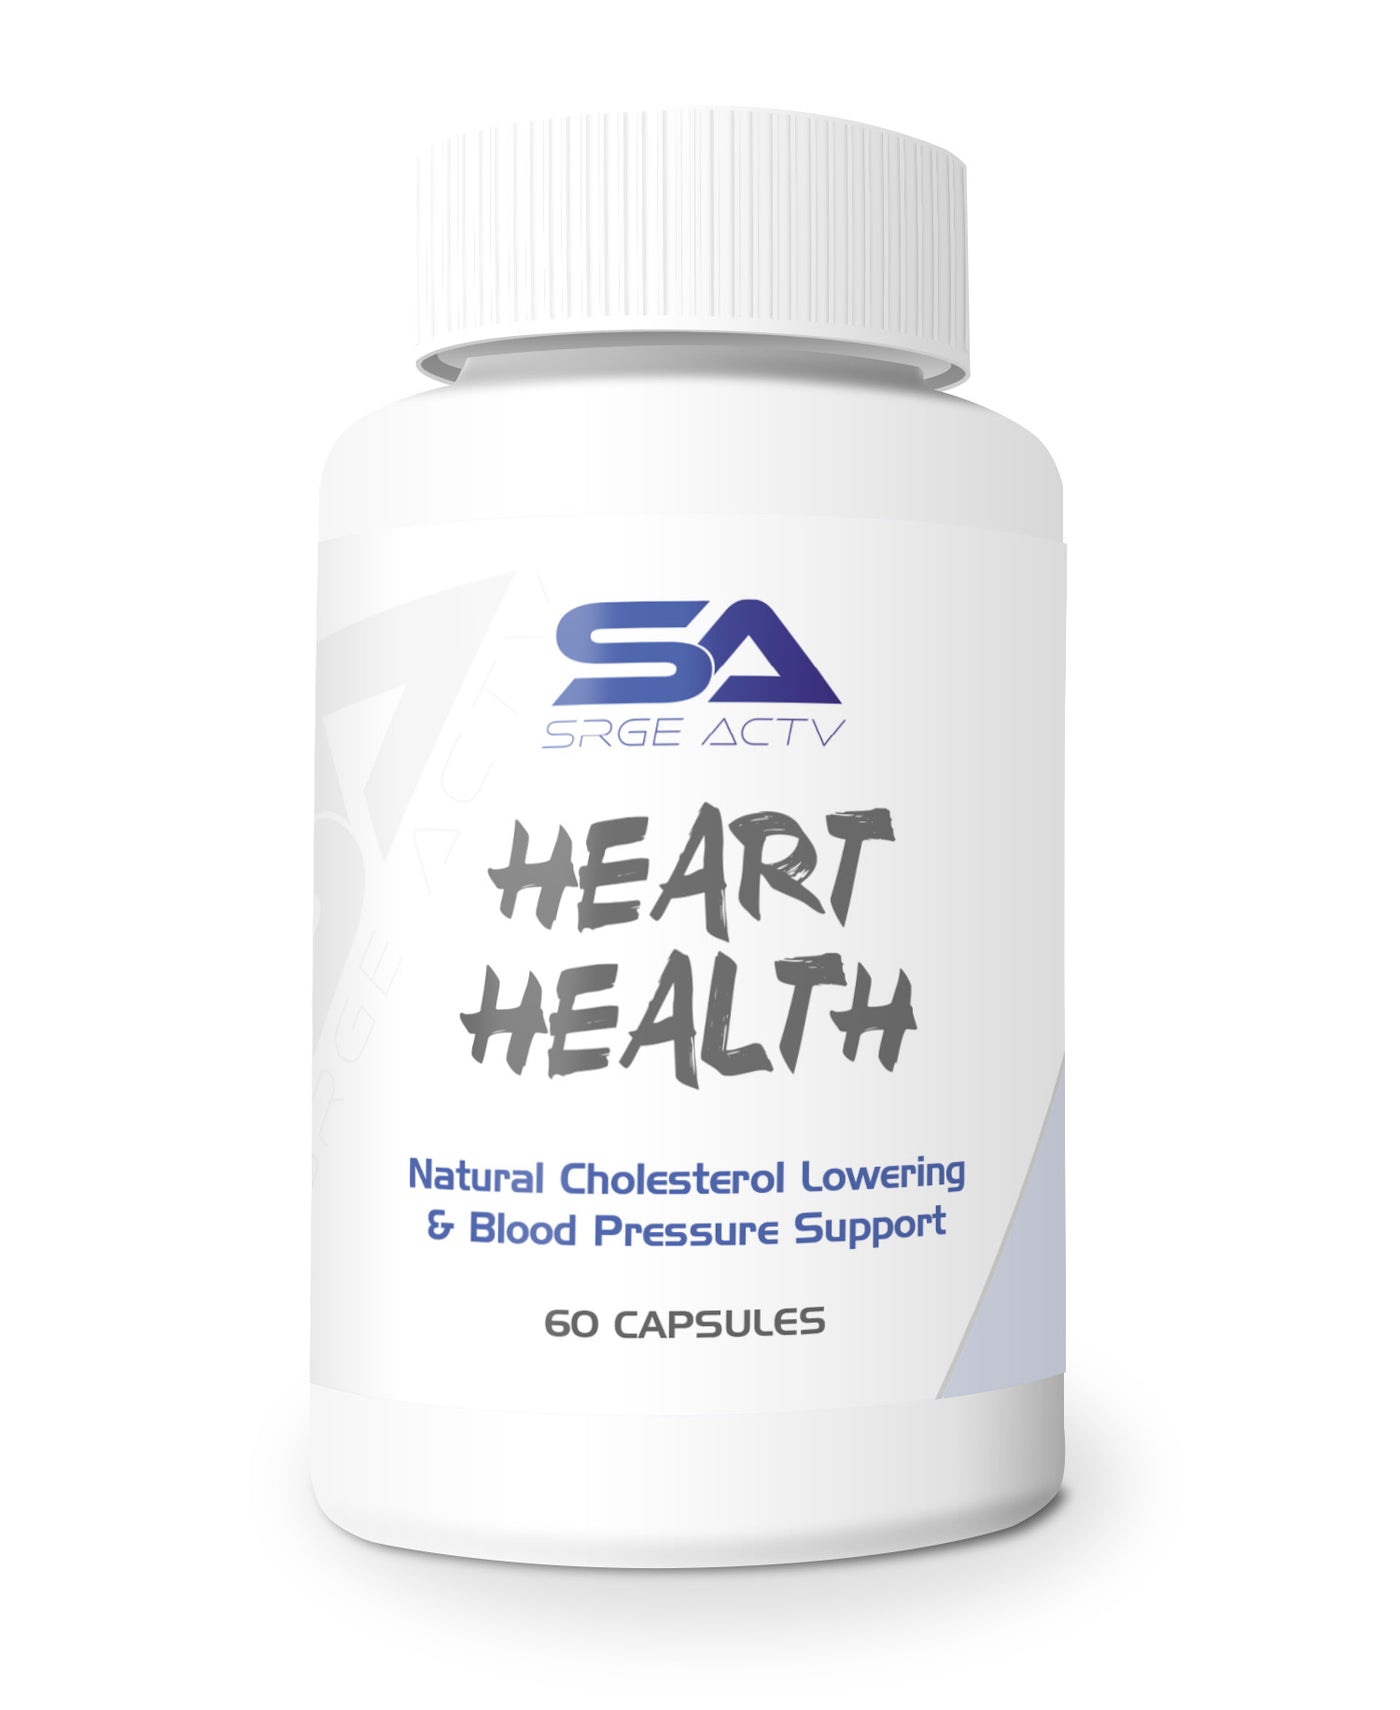 SRGE ACTV HEART HEALTH